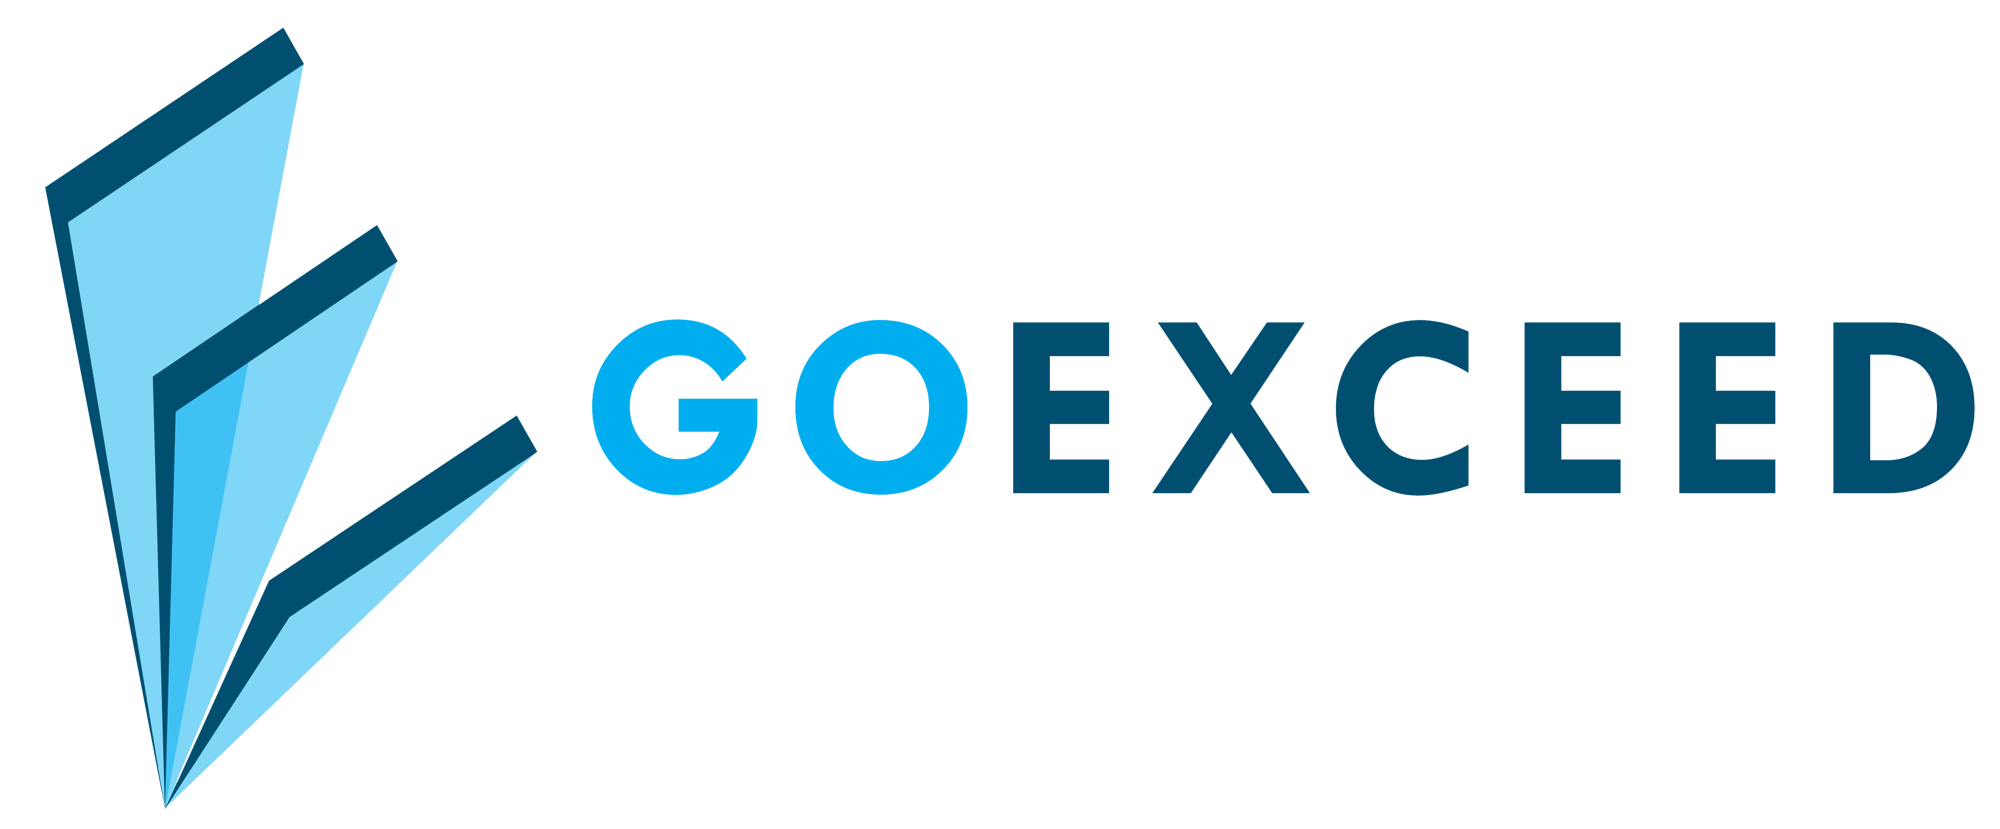 logo-goexceed